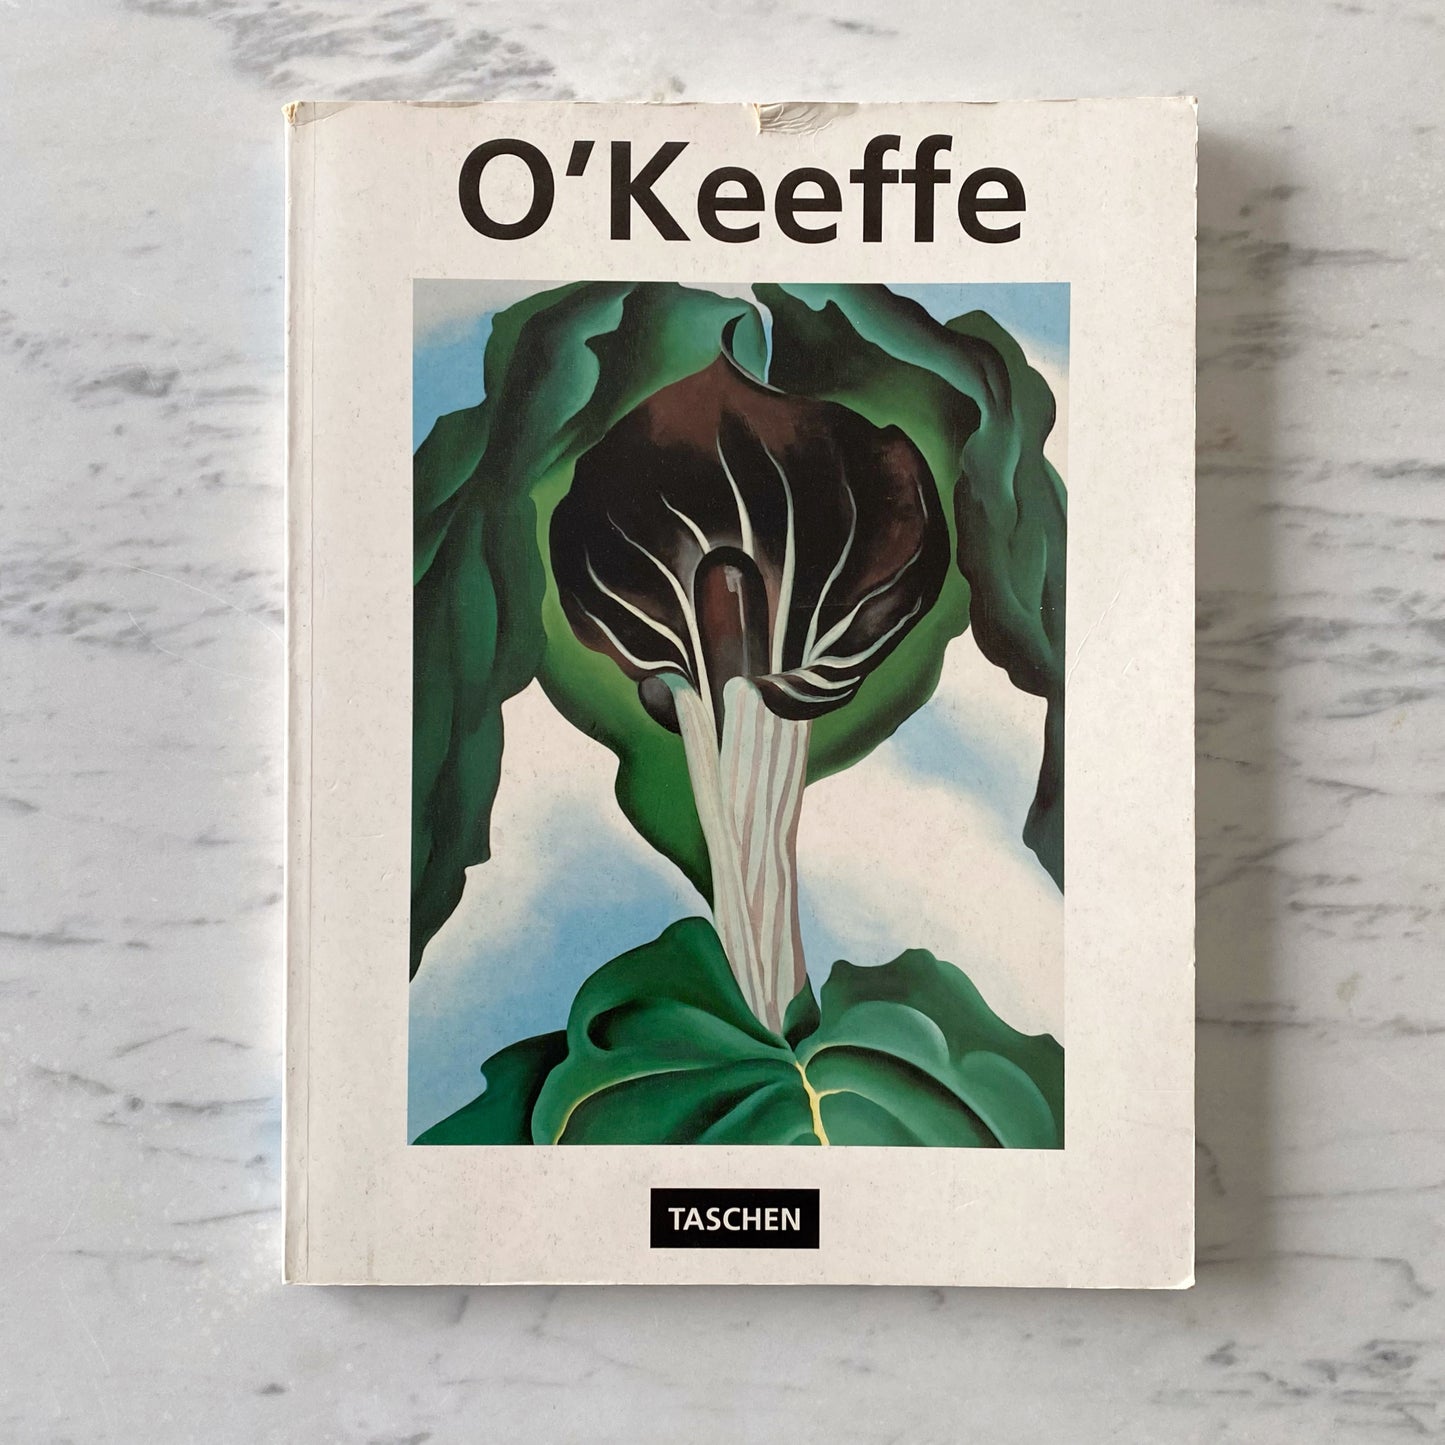 Book: Georgia O'Keeffe: Flowers in the Desert